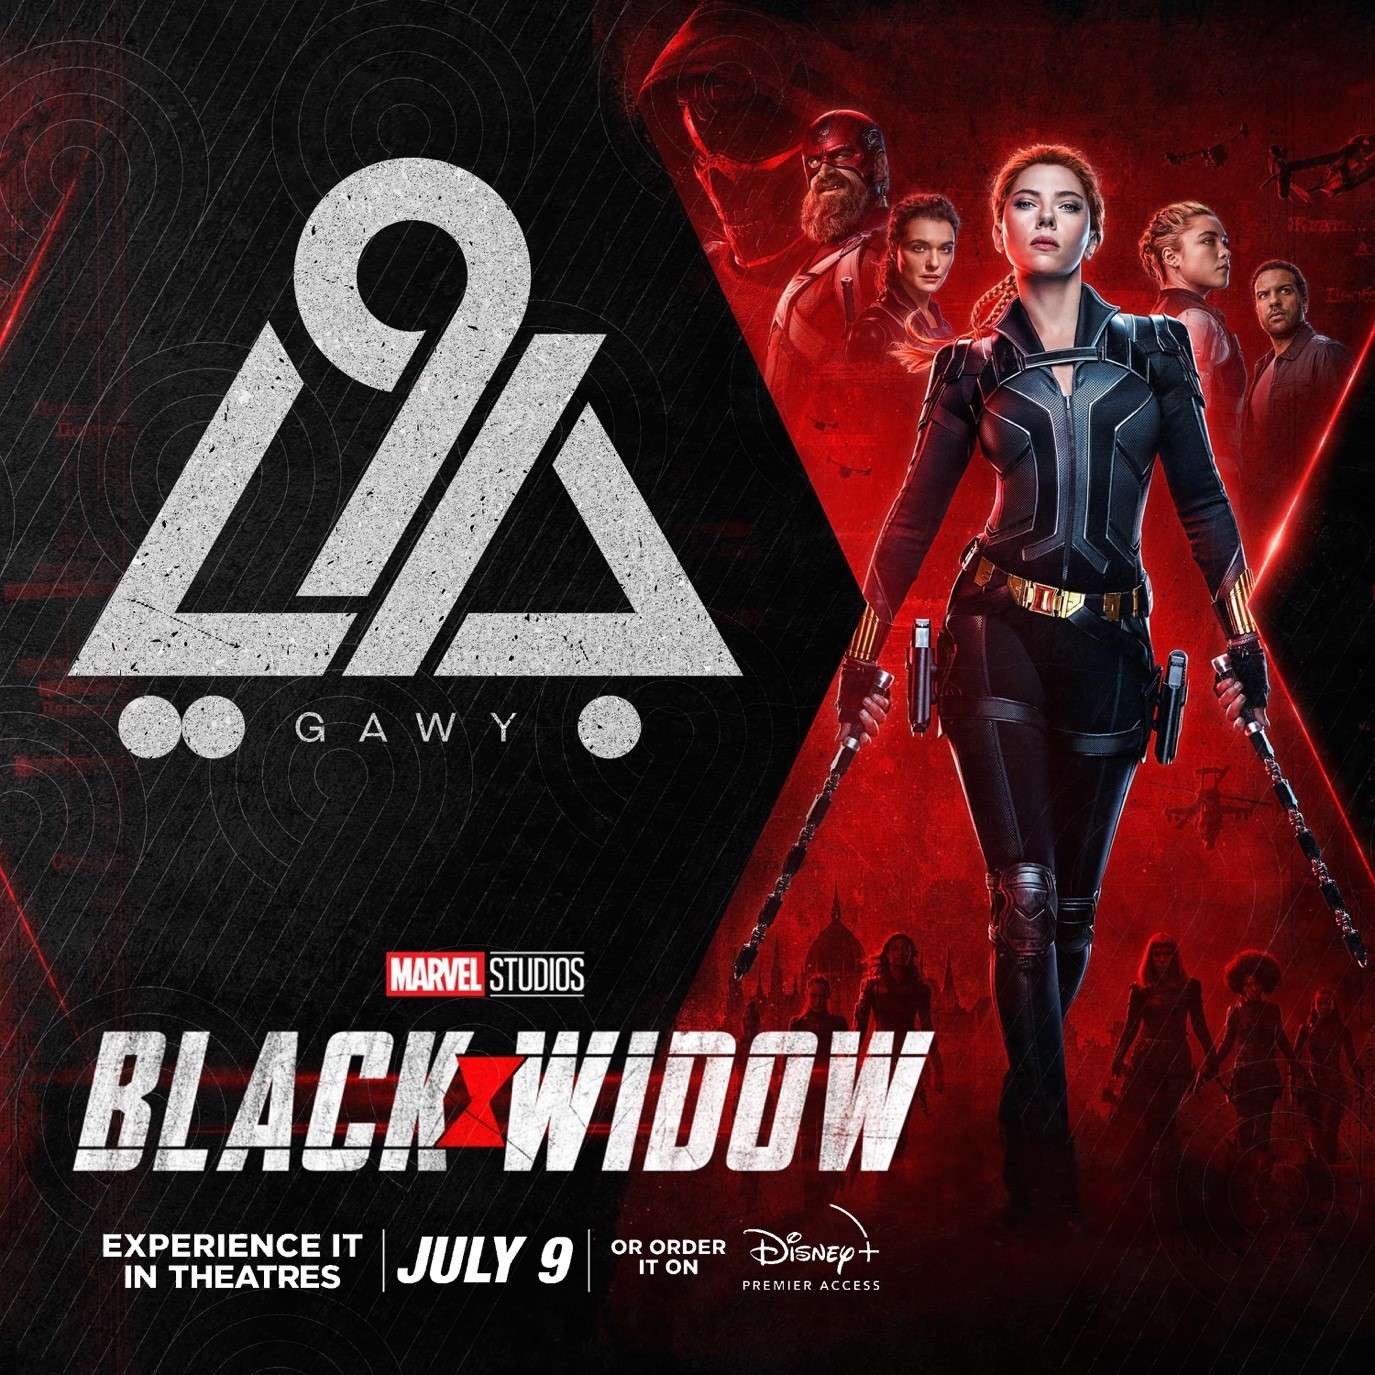 Song by Egyptian band among tracks of Marvel Studios’ Black Widow starring Scarlett Johansson